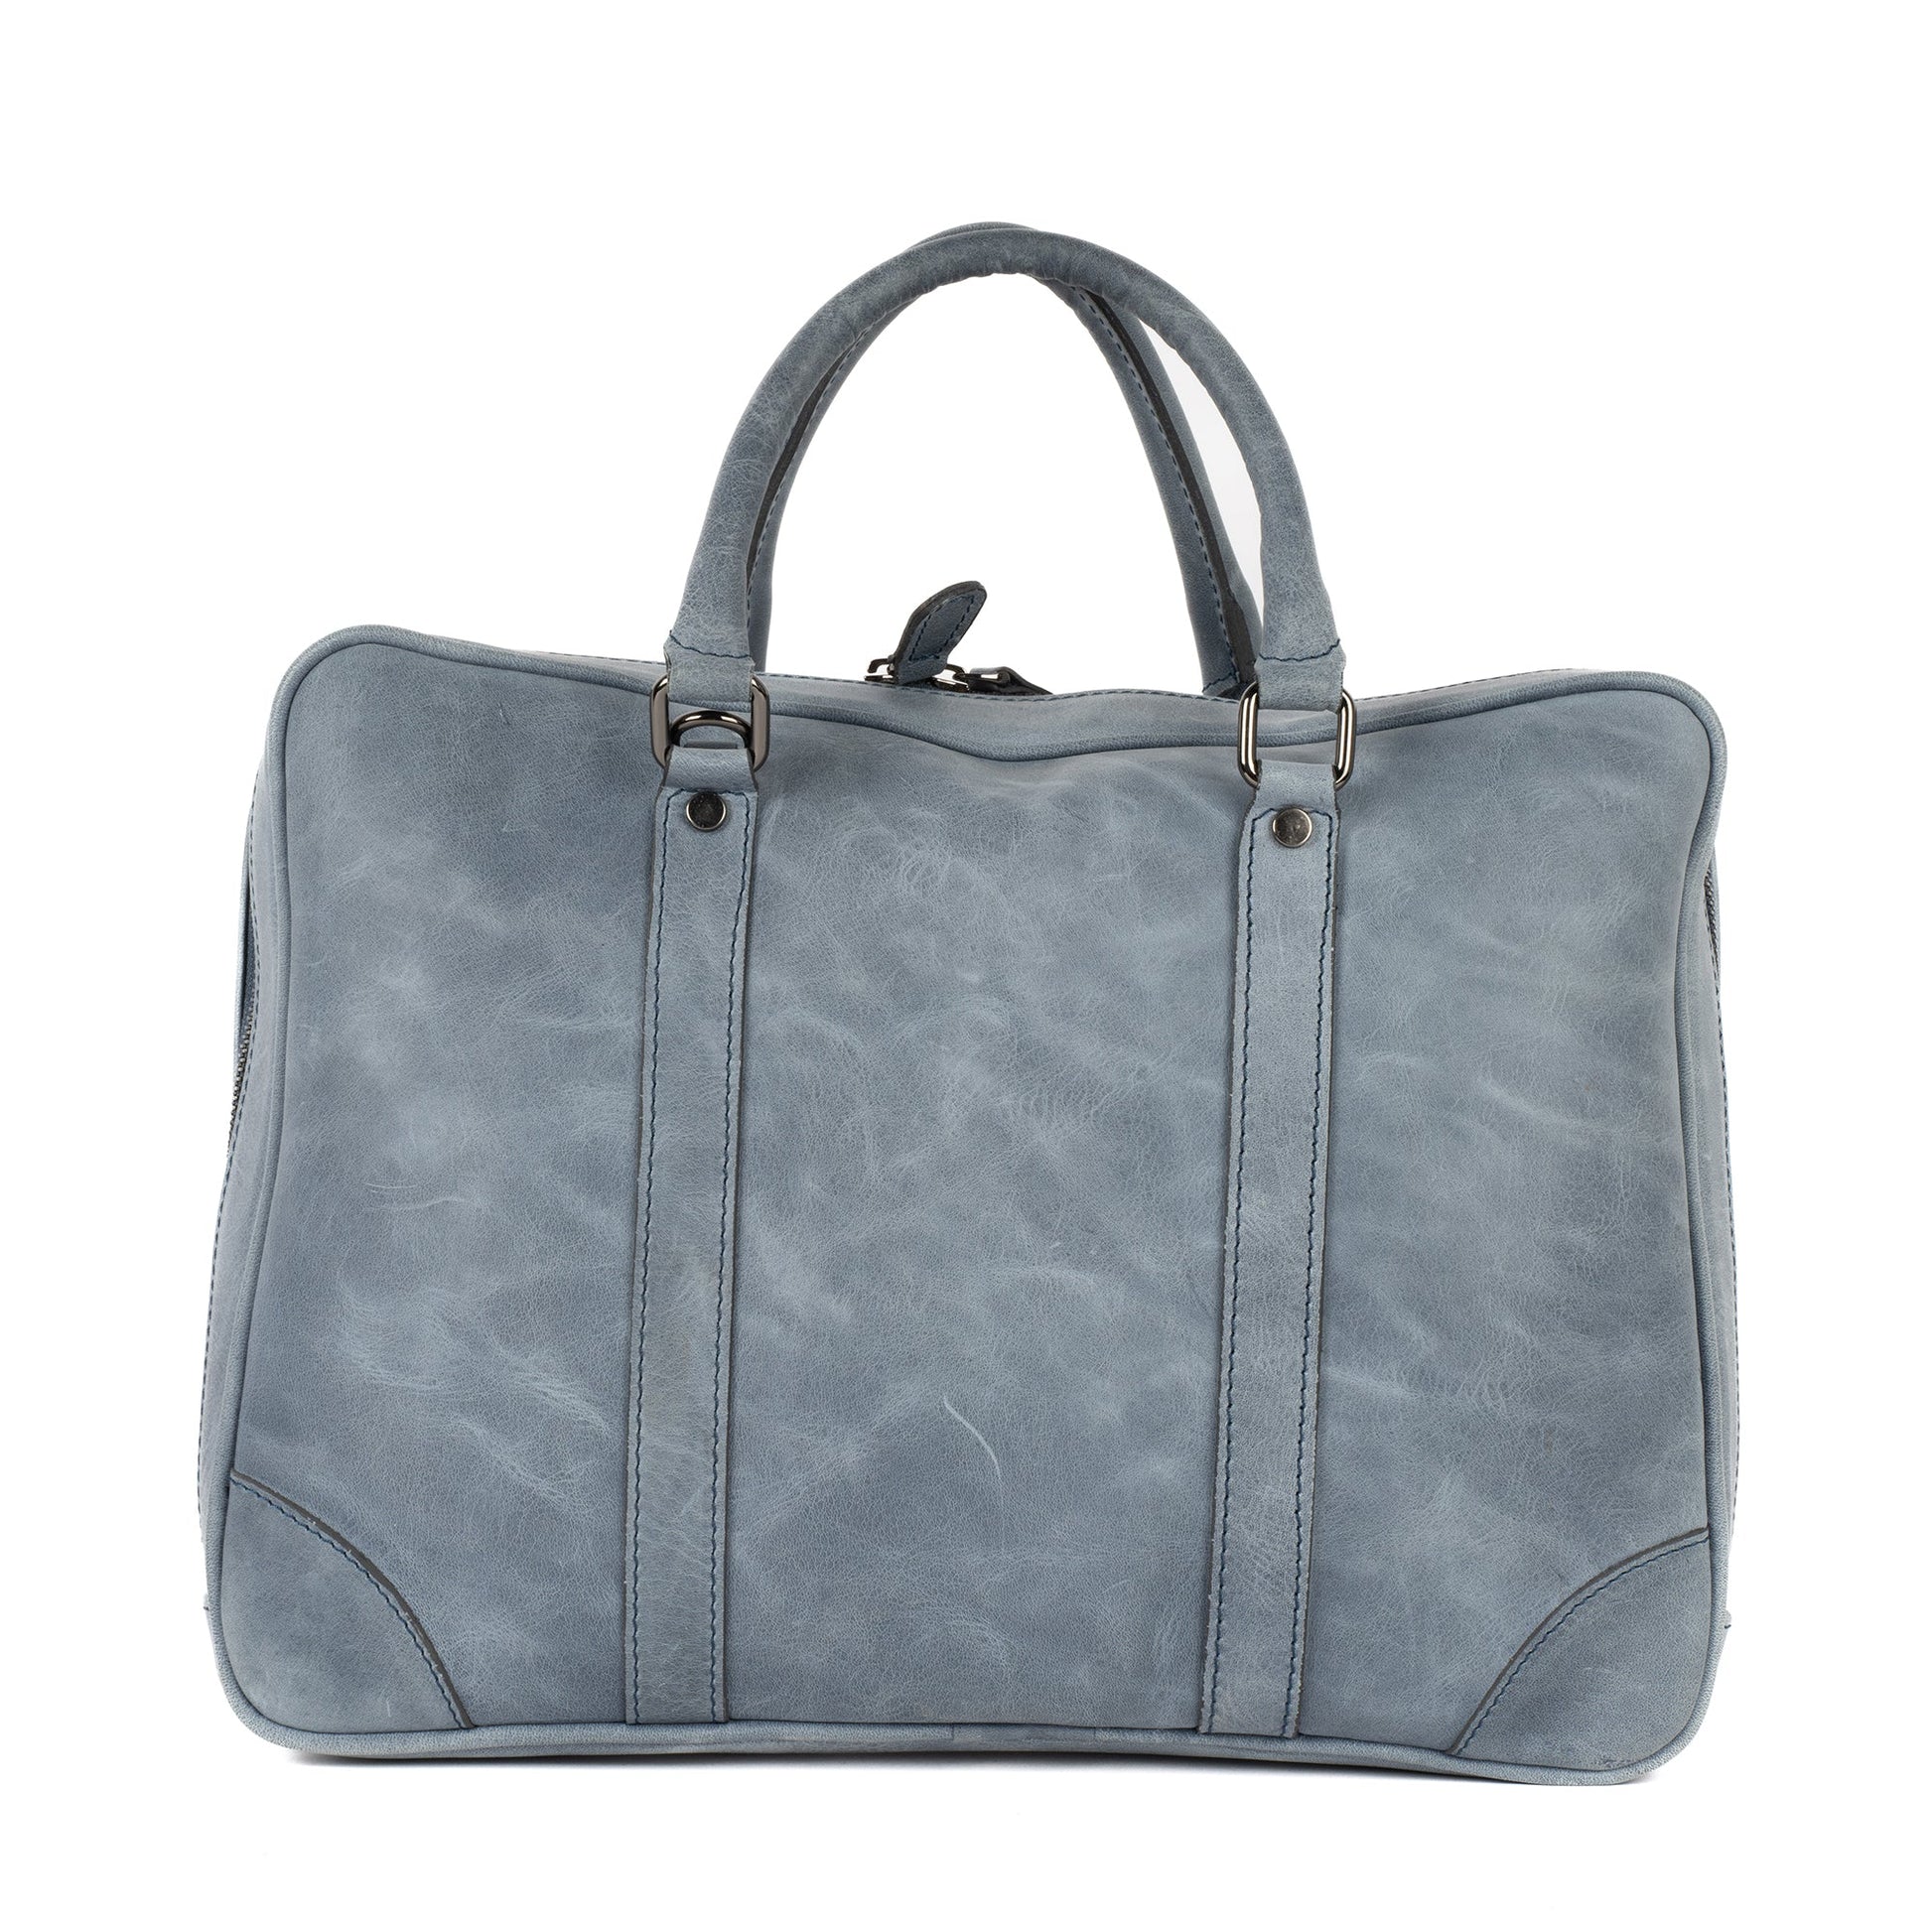 Carpo Leather Messenger Bag - Navy Blue - Bags Zengoda Shop online from Artisan Brands